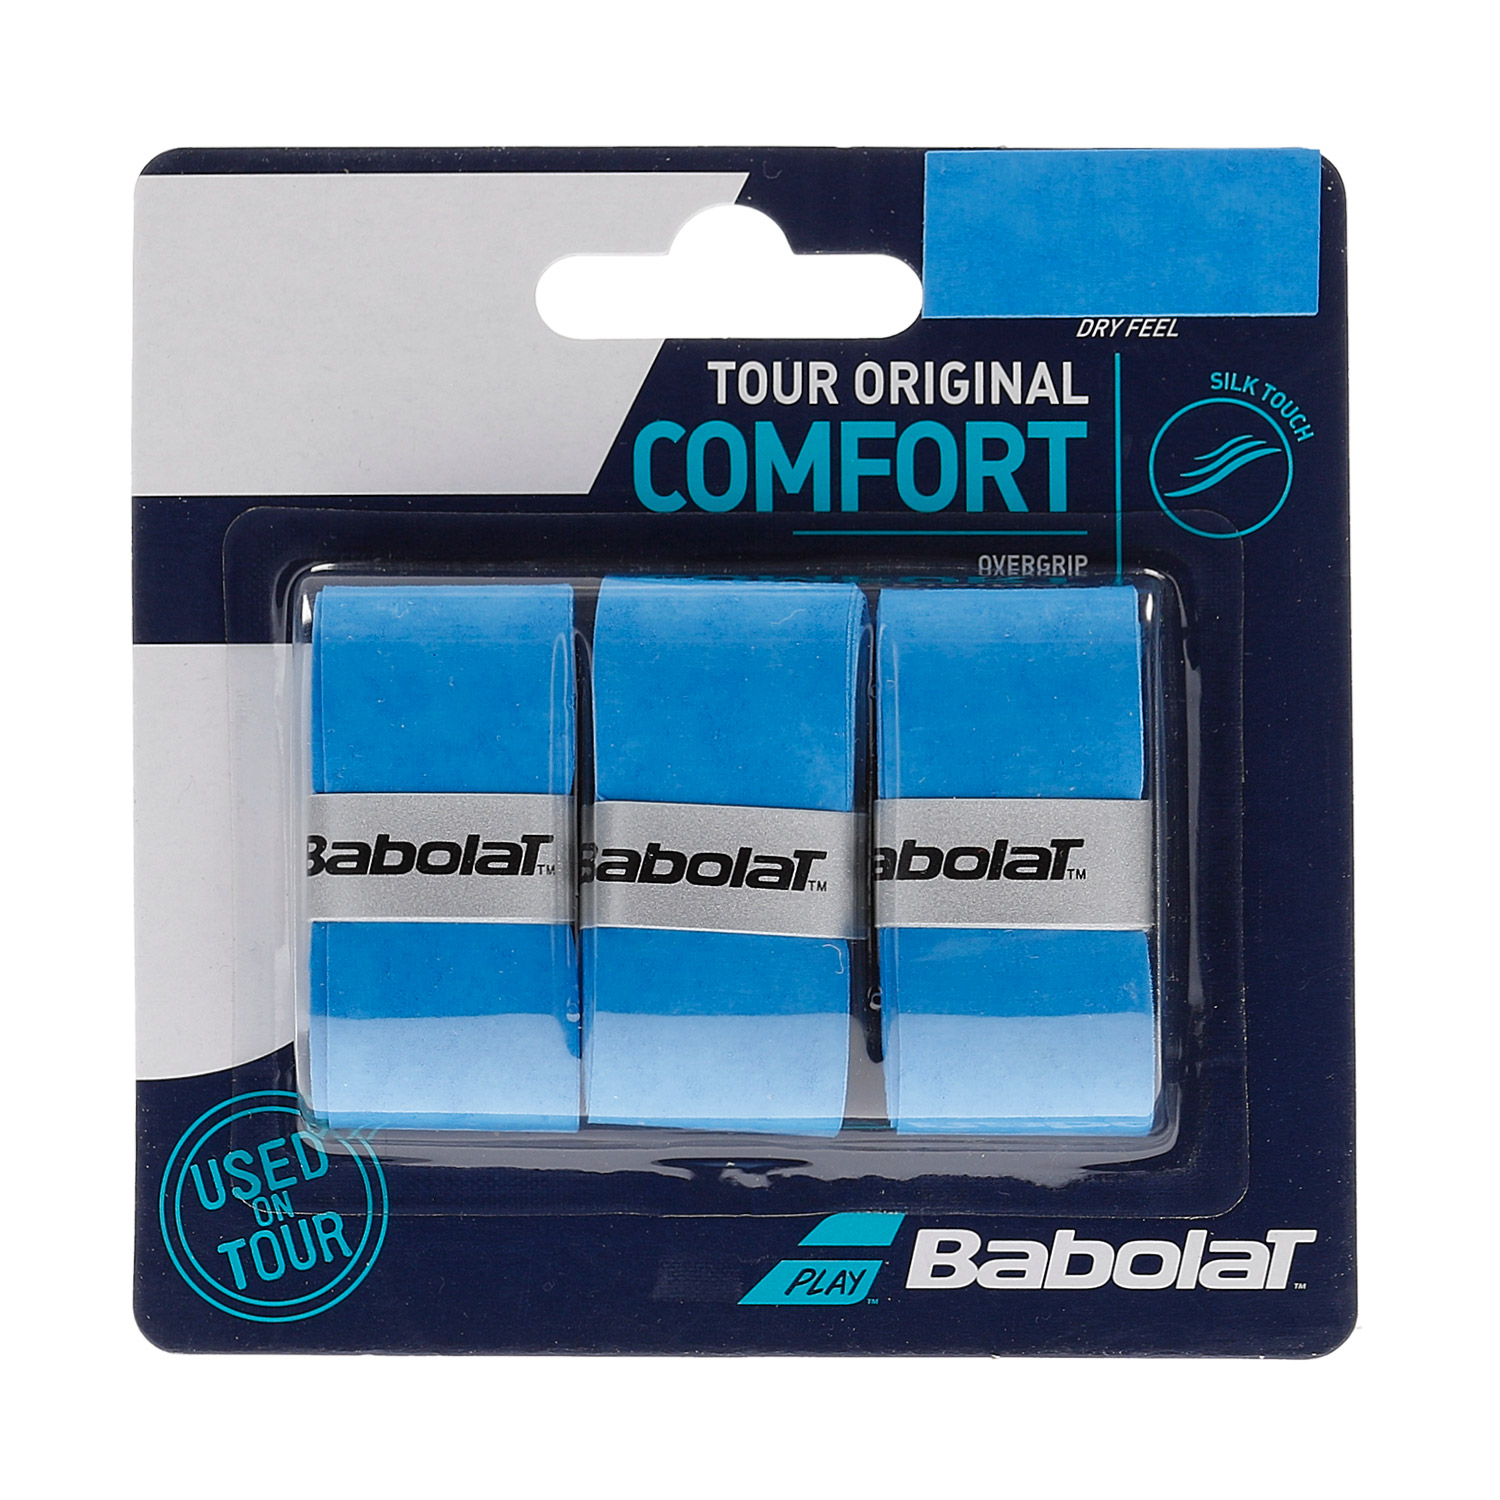 Babolat Babolat Tour Original Comfort Tennis Racket Overgrips 12 Pack 0.55mm White 